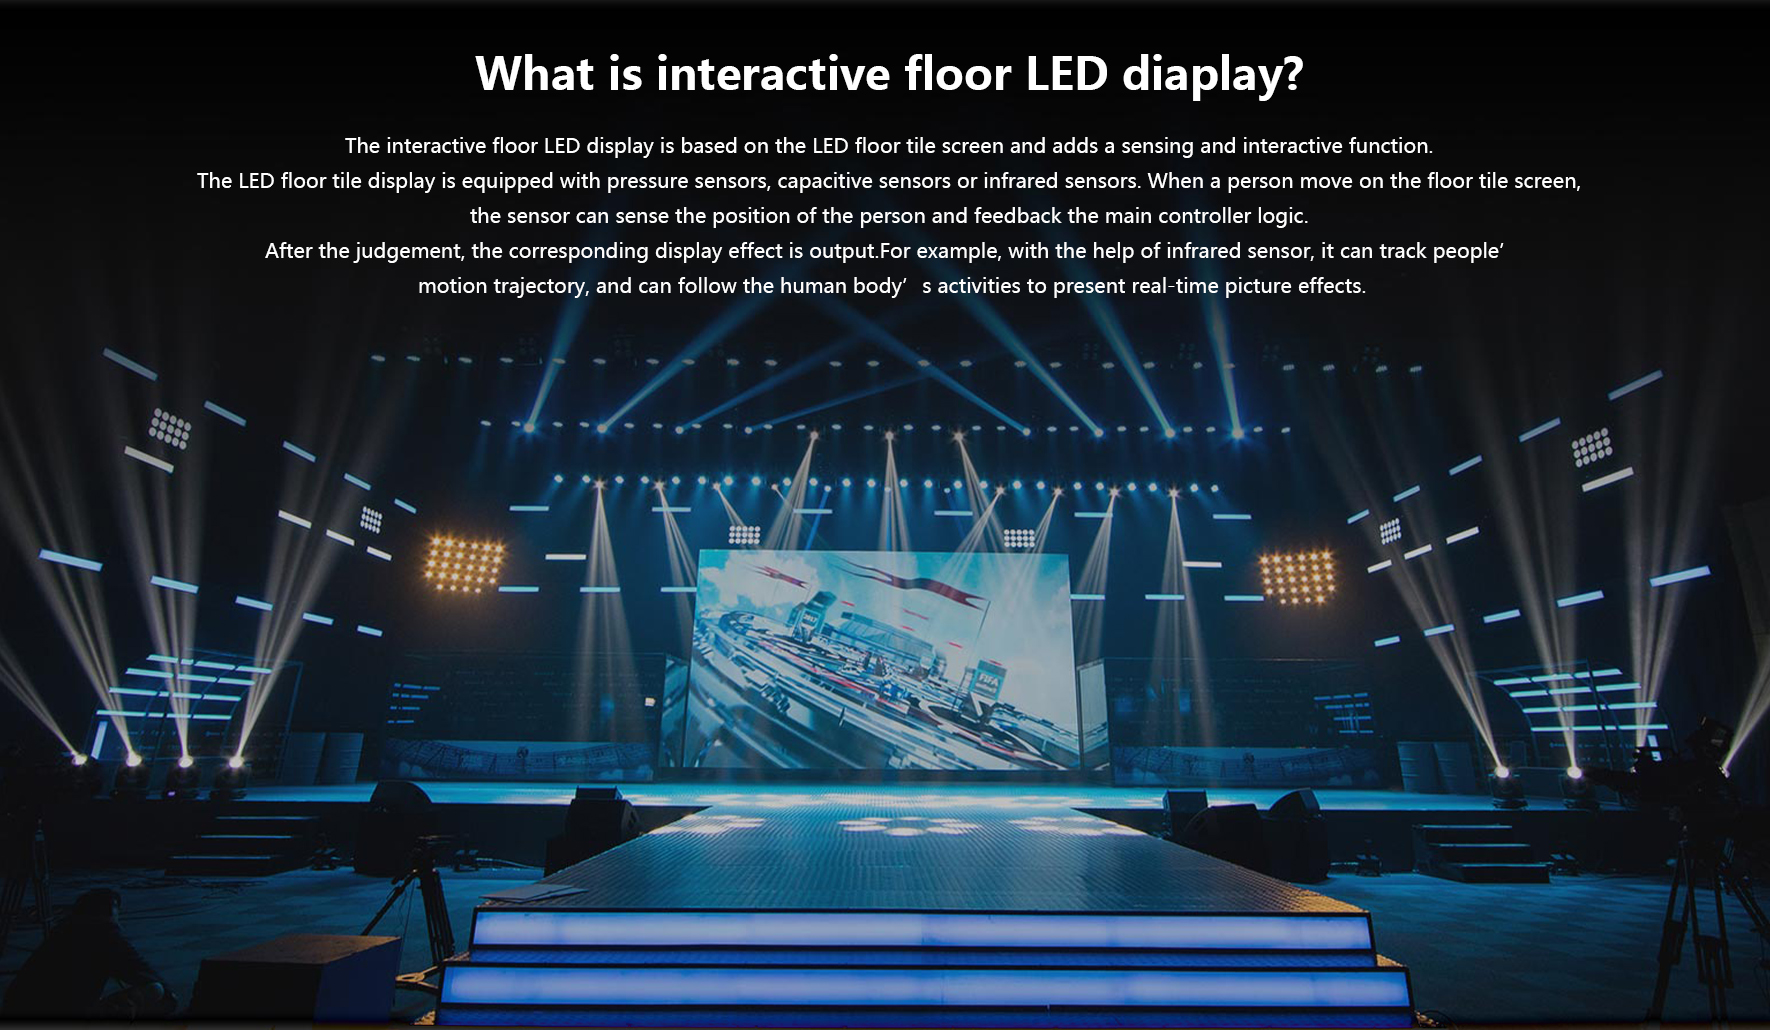 led-floor-display-imagesfeatur4